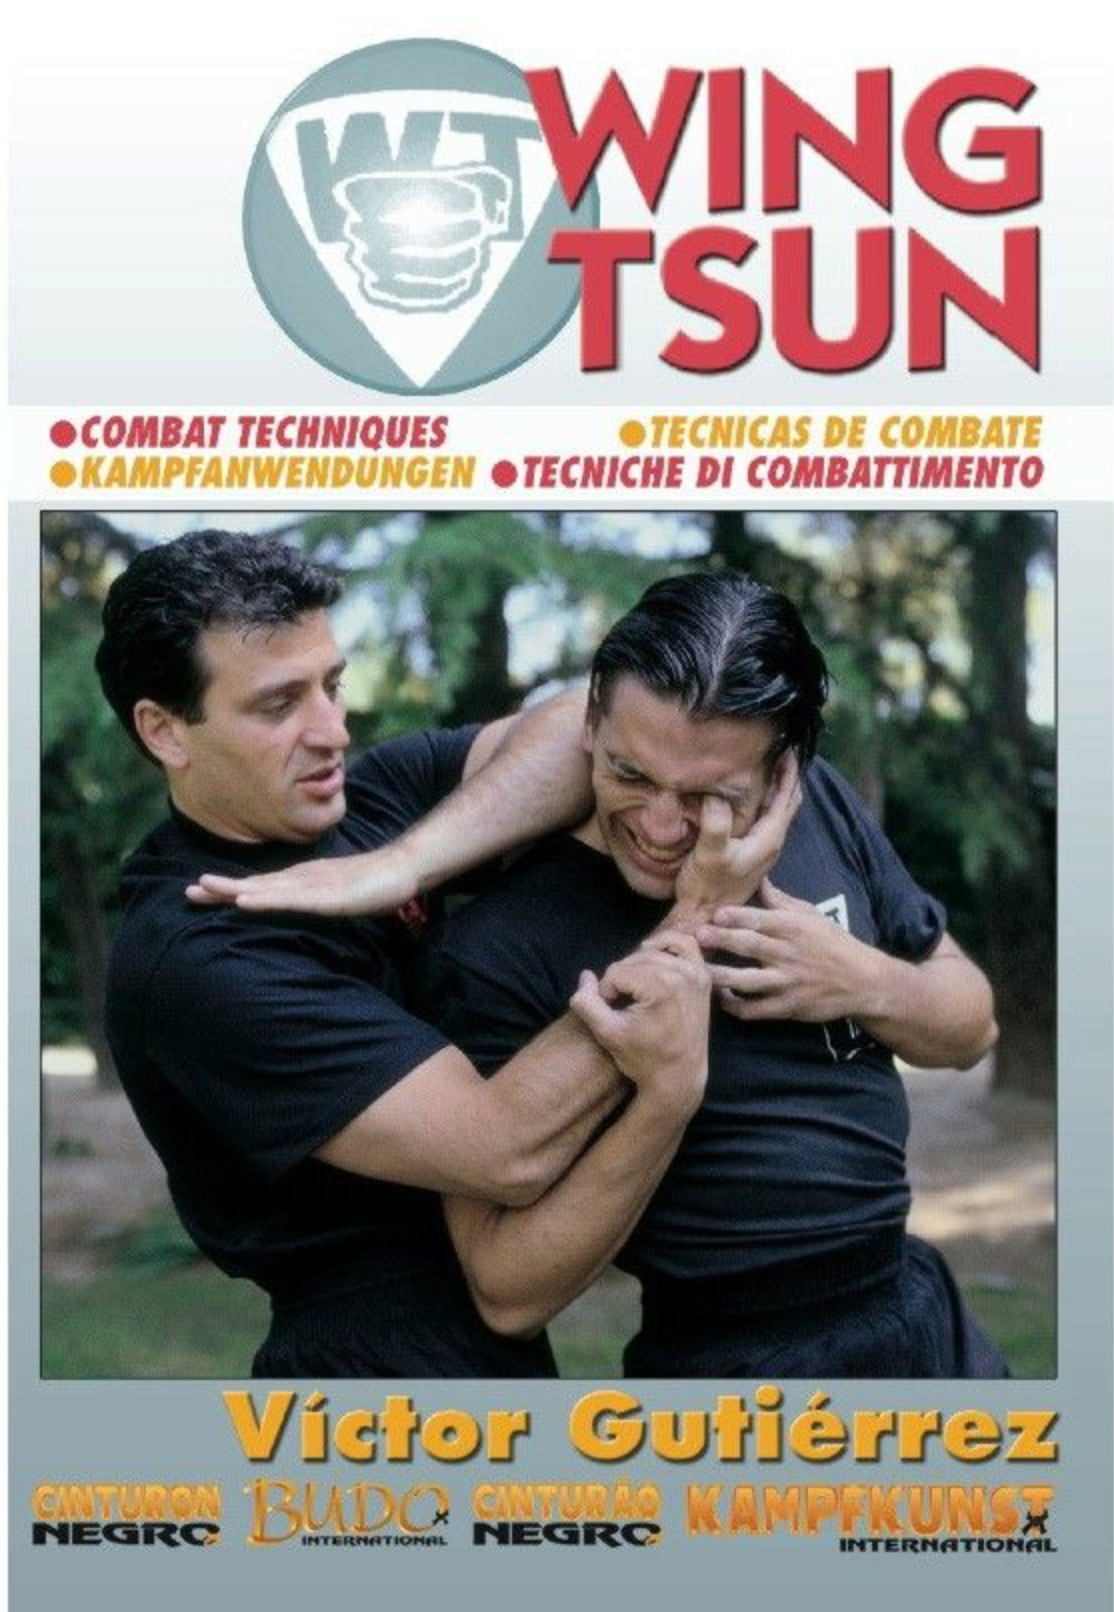 Wing Tsun Combat Techniques DVD by Victor Gutierrez - Budovideos Inc